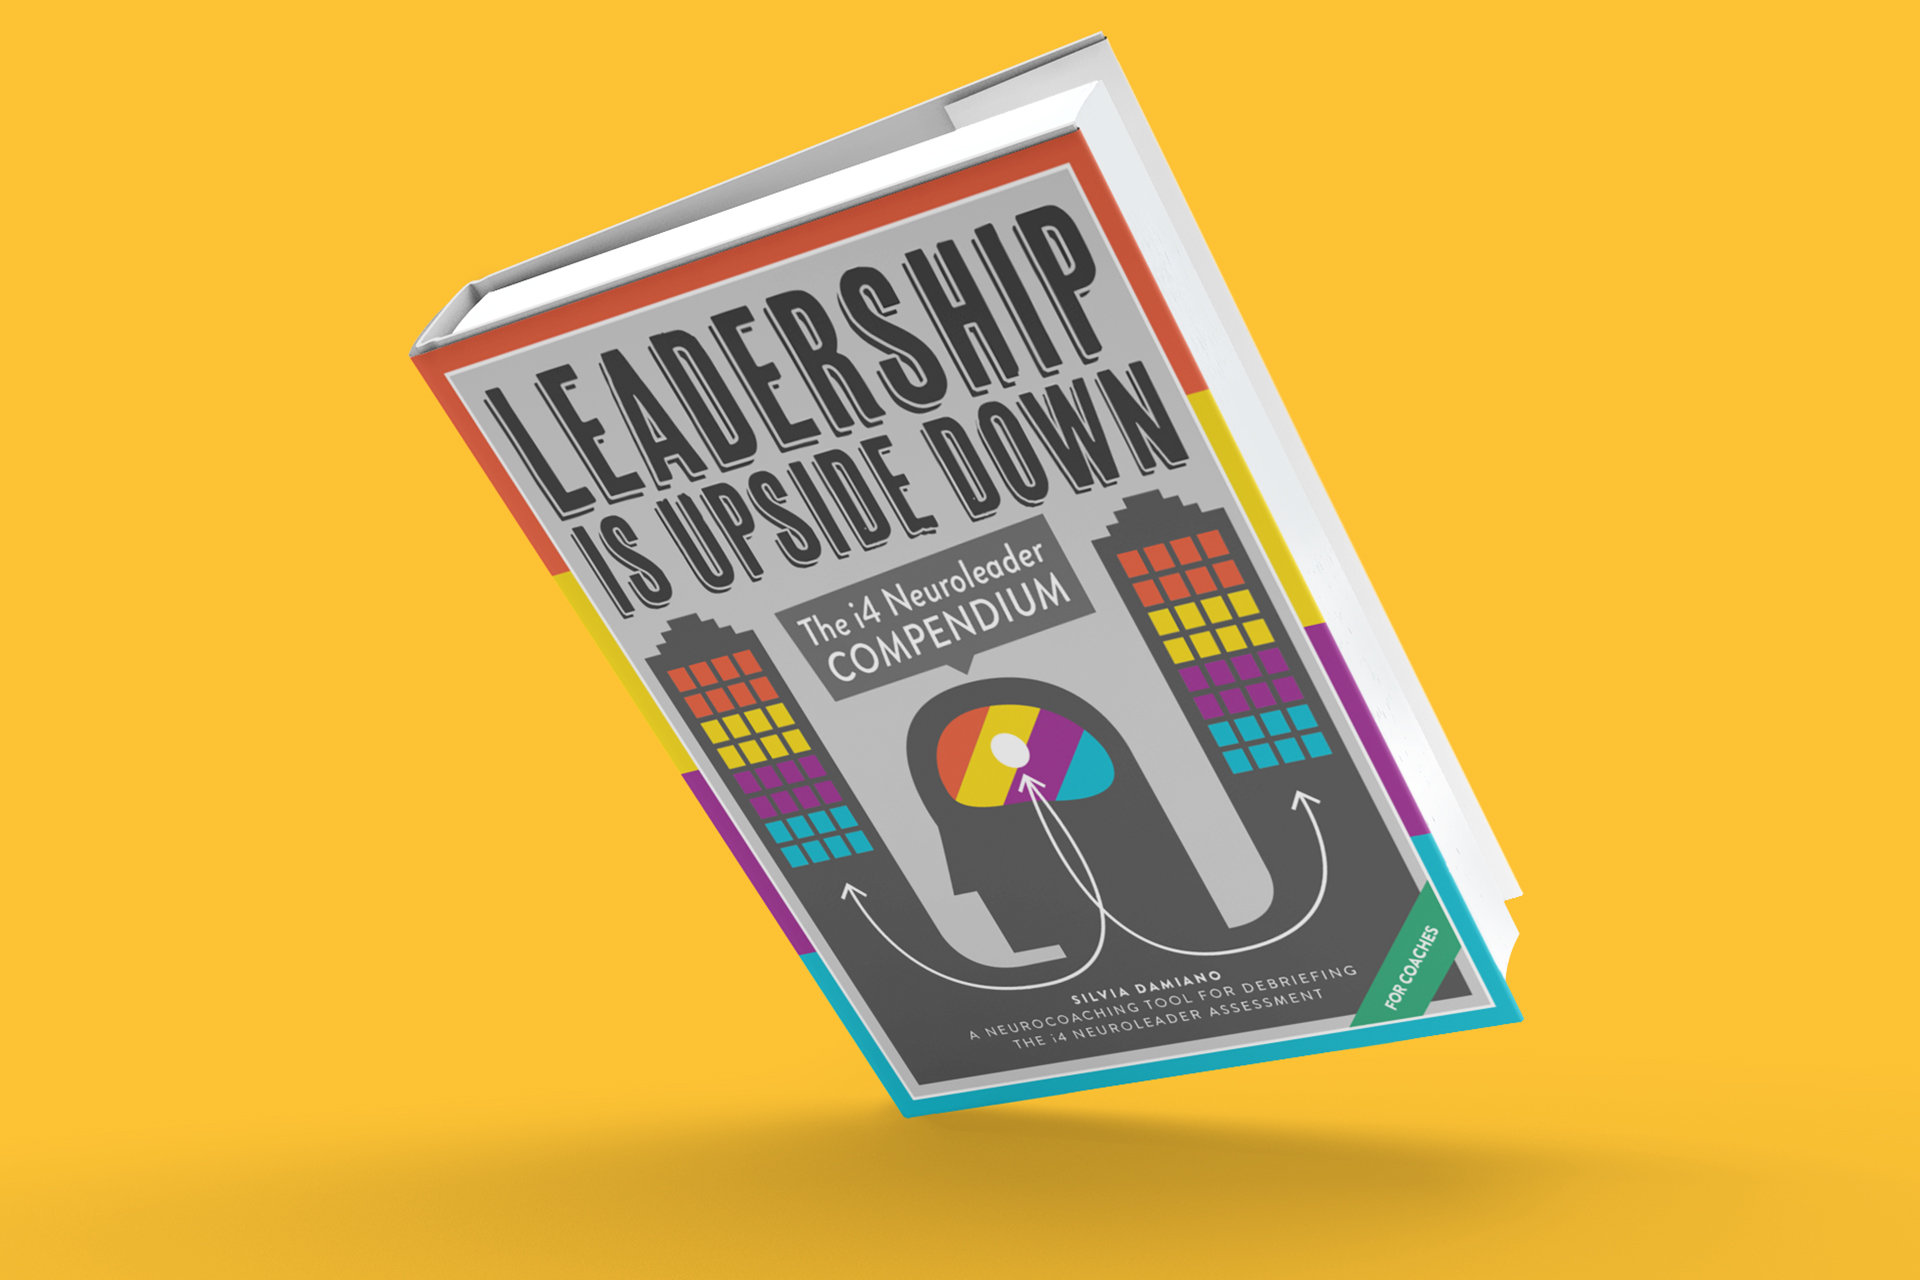 leadership-is-upside-down-compendium-i4-neuroleader